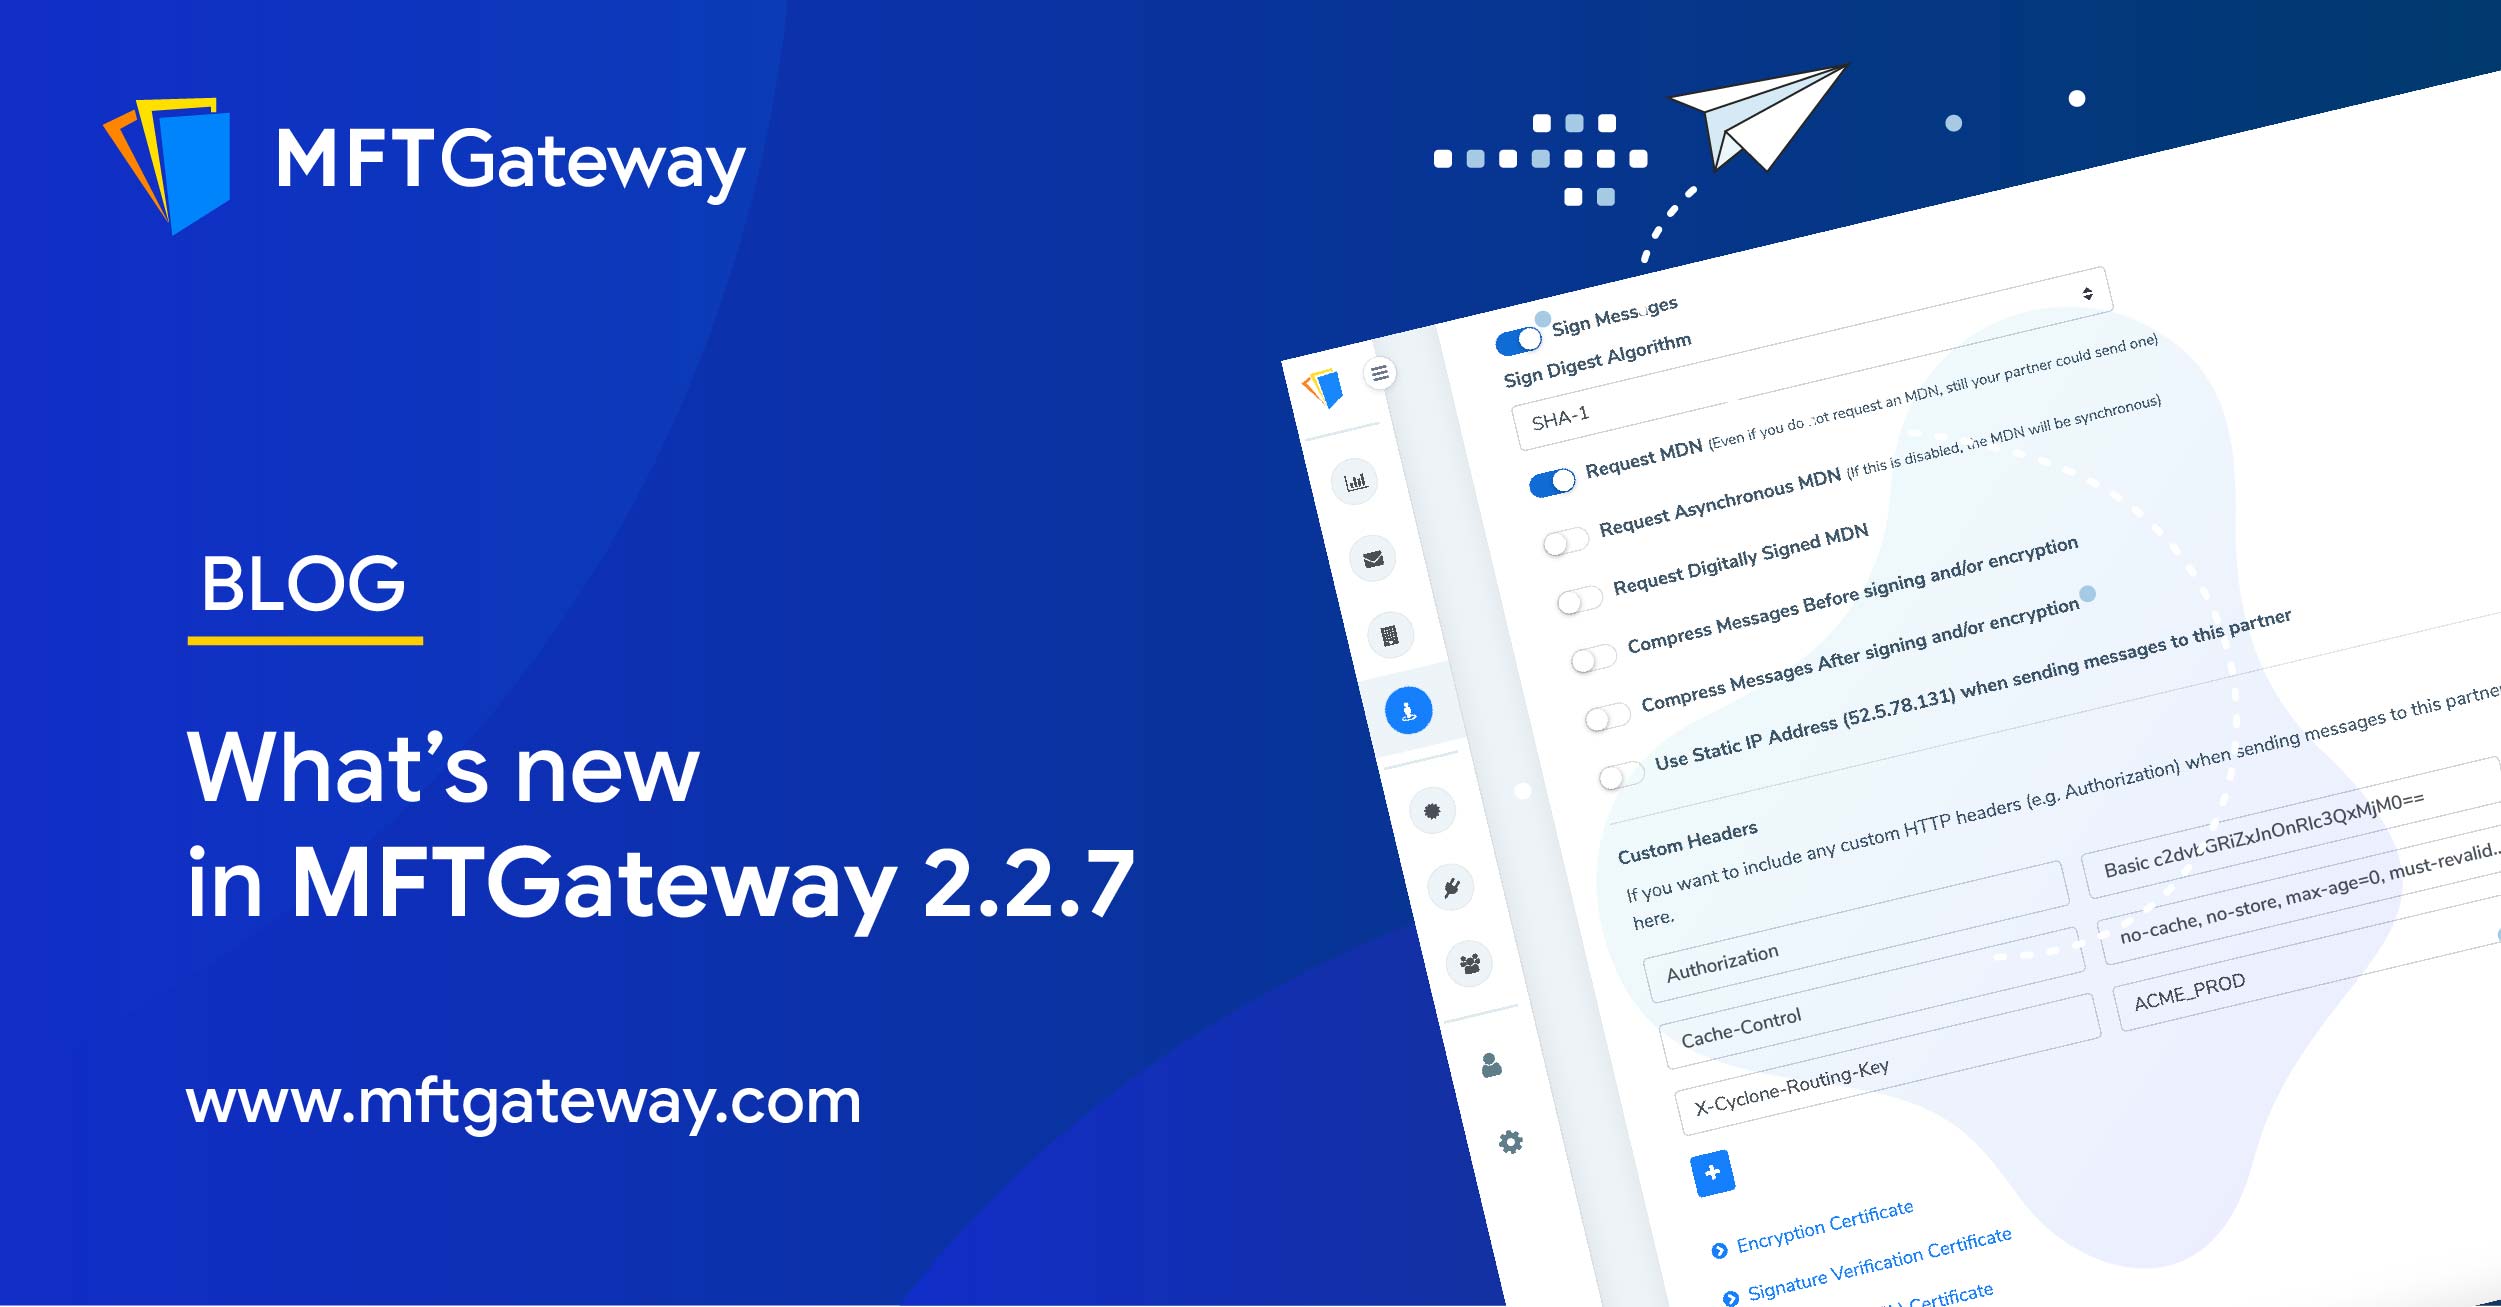 MFT Gateway 2.2.7